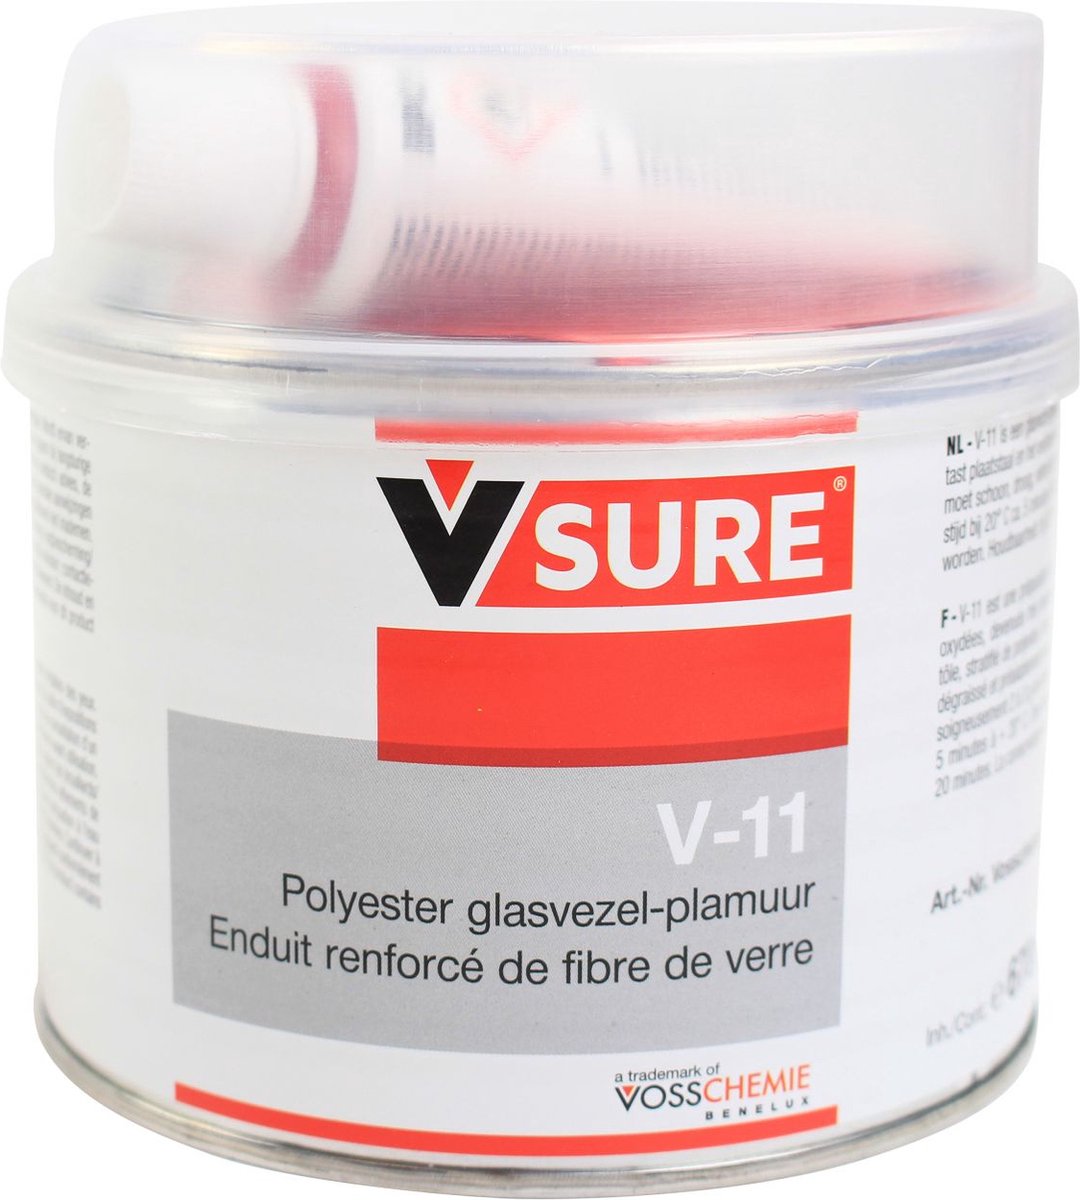 V-Sure Polyester glasvezel plamuur 700gr - V11 + BPO - glasvezelgevulde polyesterplamuur - voor opvullen en versterken